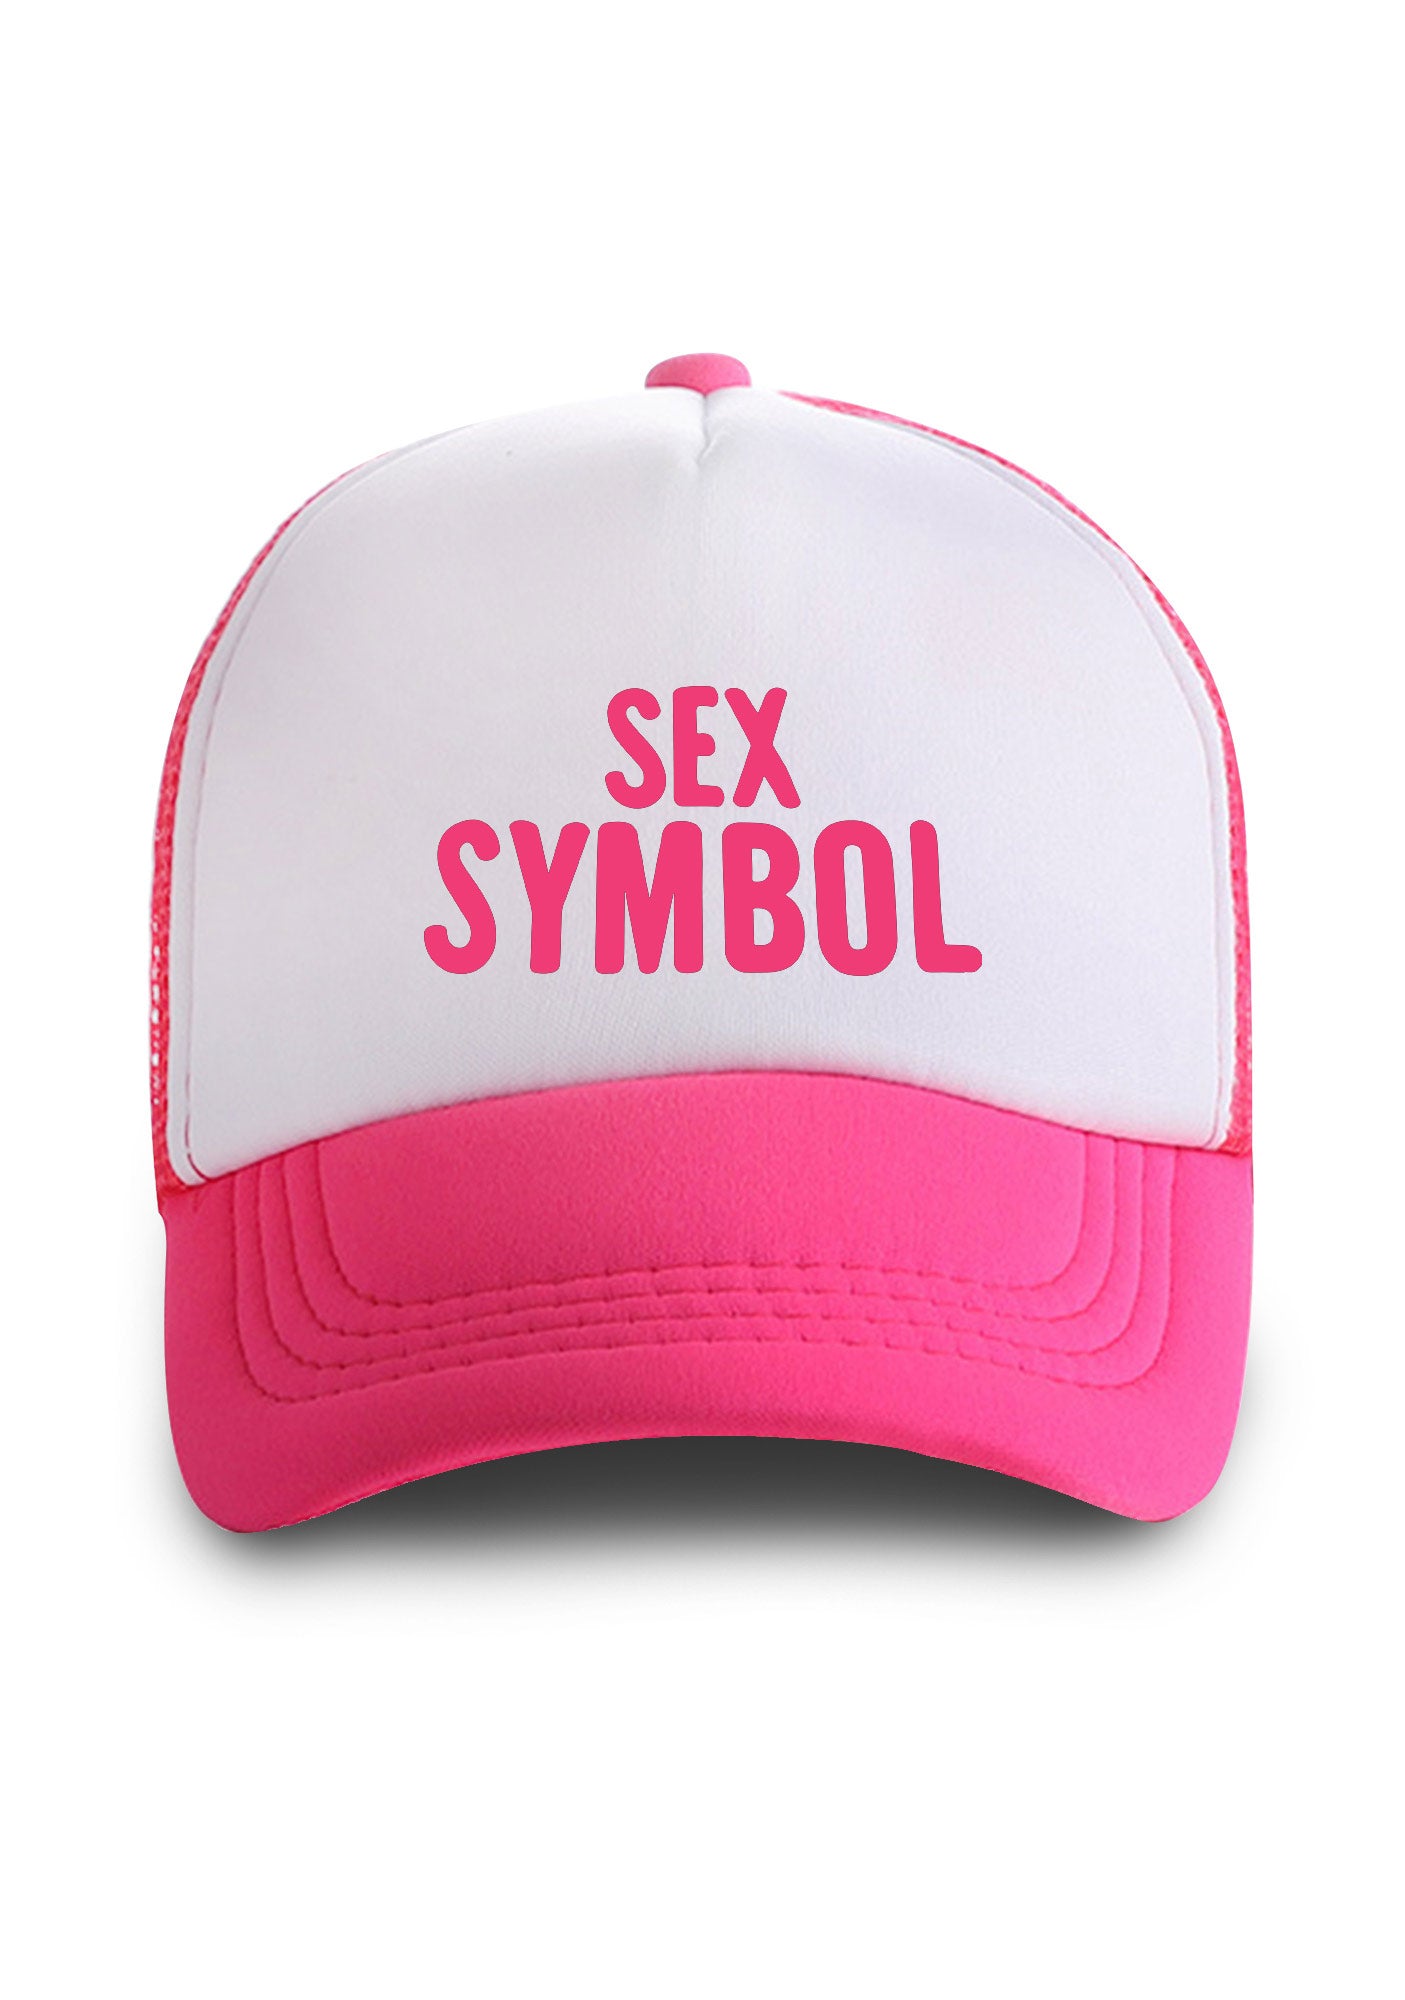 Sx Symbol Trucker Hat